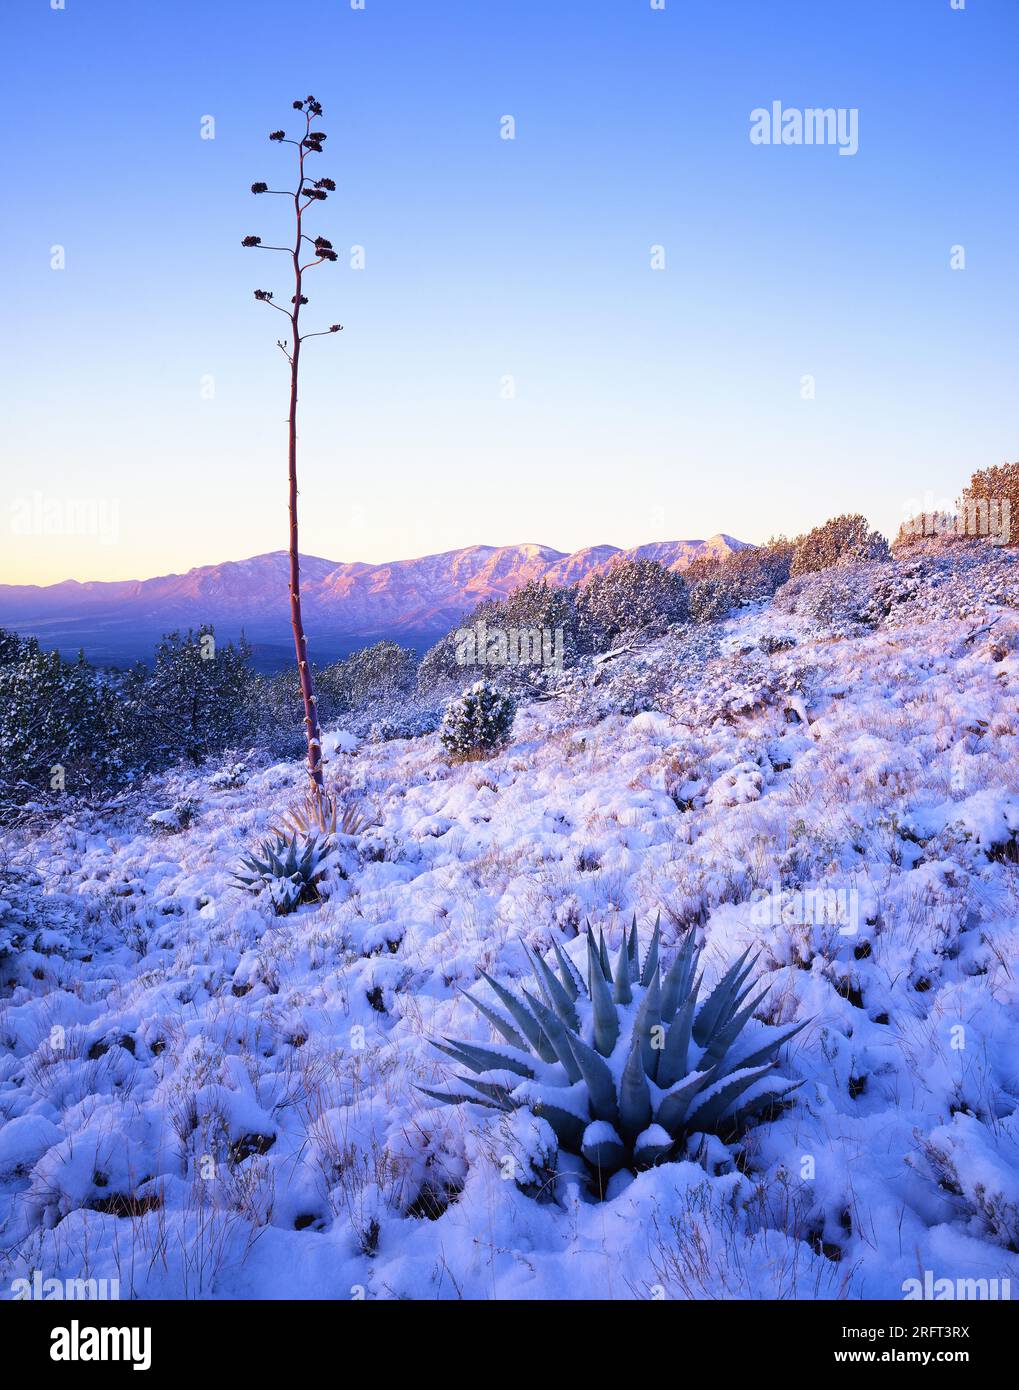 Century plants on the foothills of the Mazatal Mountains, Central arizona. Stock Photo